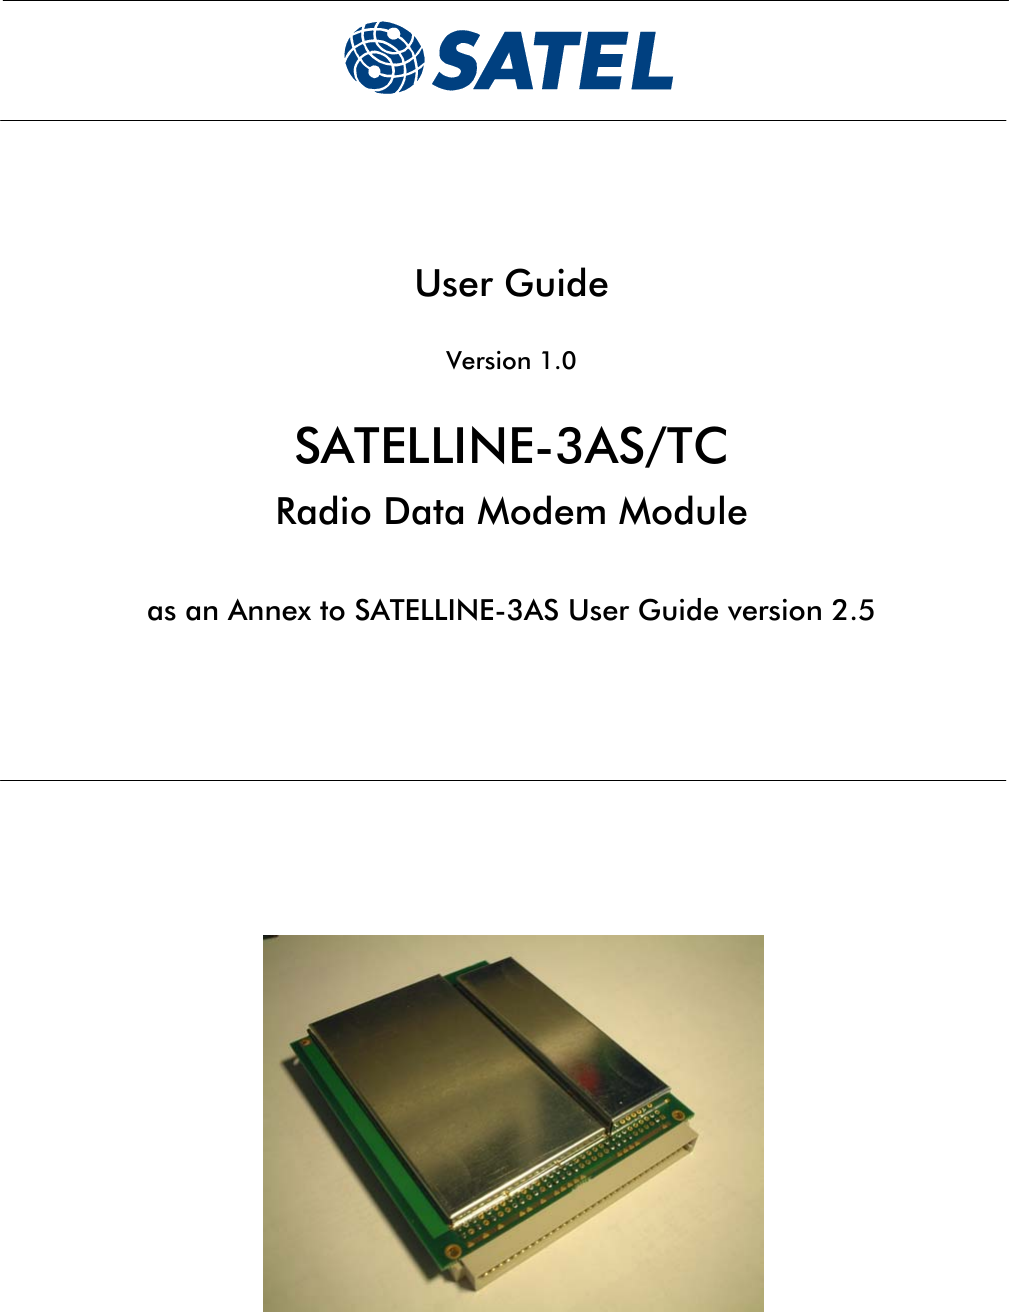           User Guide  Version 1.0  SATELLINE-3AS/TC Radio Data Modem Module   as an Annex to SATELLINE-3AS User Guide version 2.5   